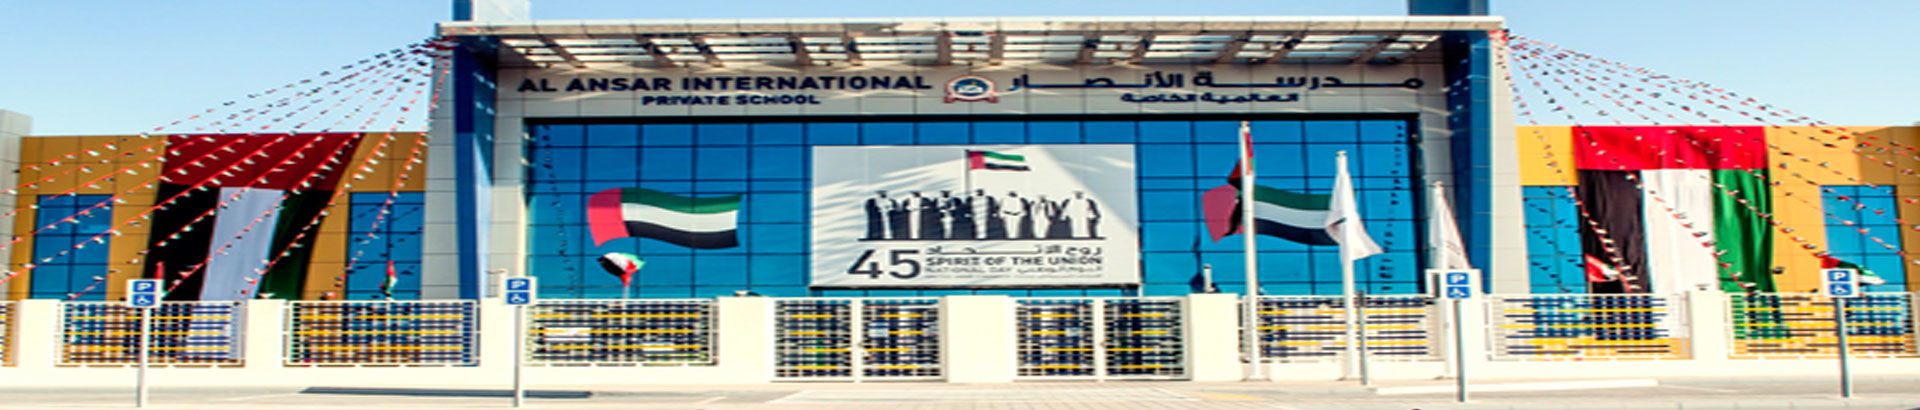 Al Ansar International School-edcare.ae